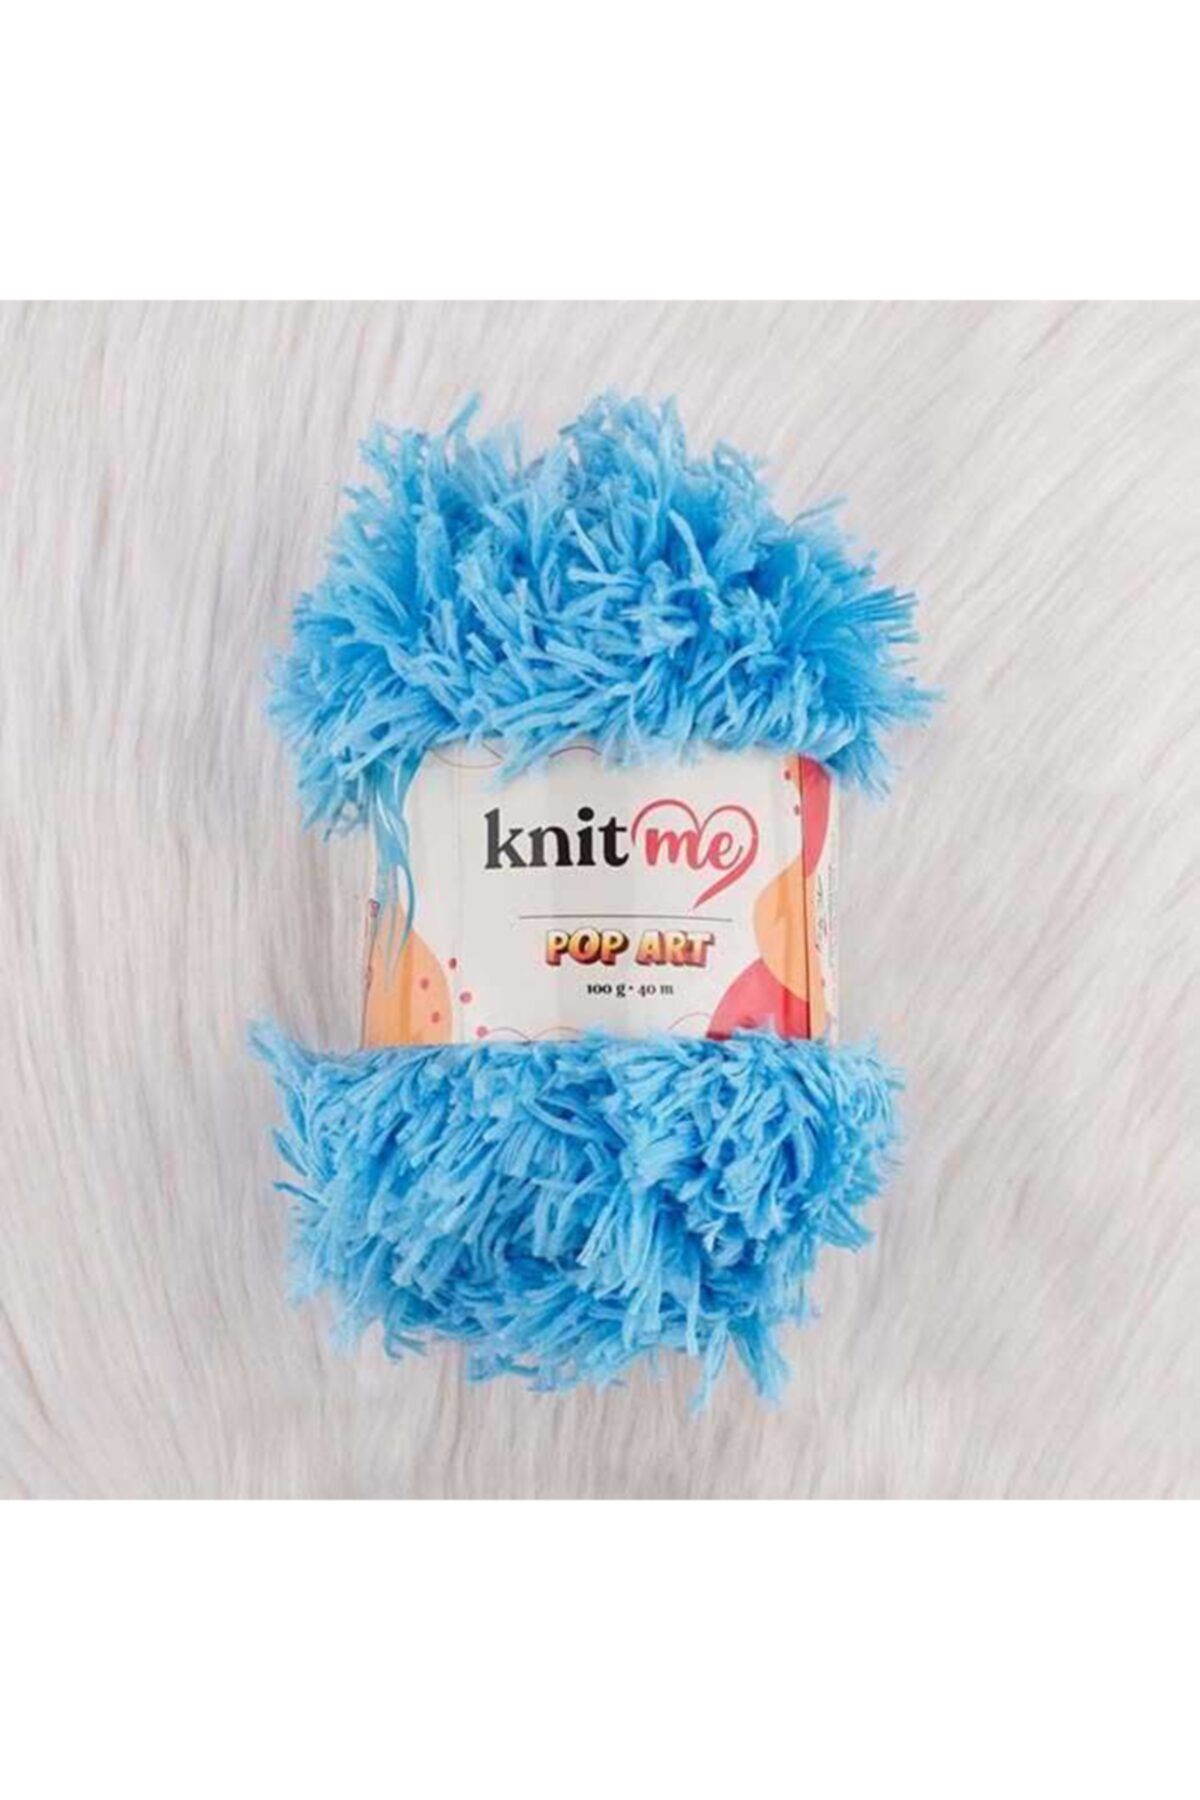 knitme Knit Me Pop Art El Örgü Ipi 100 G.40 Mt. 952